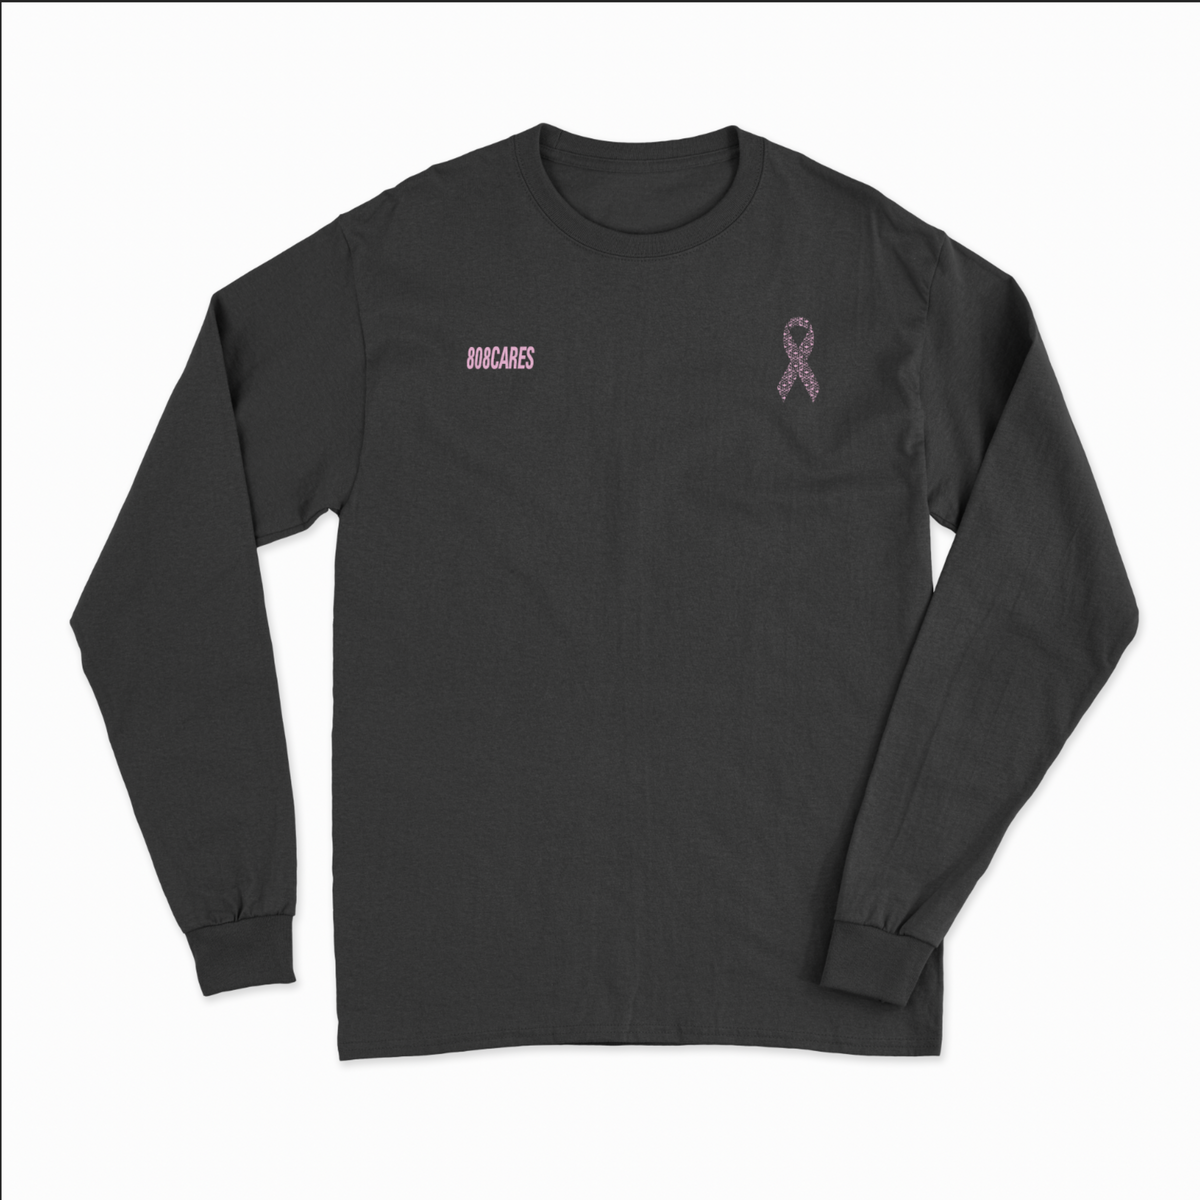 808 Breast Cancer Awareness Fundraiser Long Sleeve (Pre-Order)